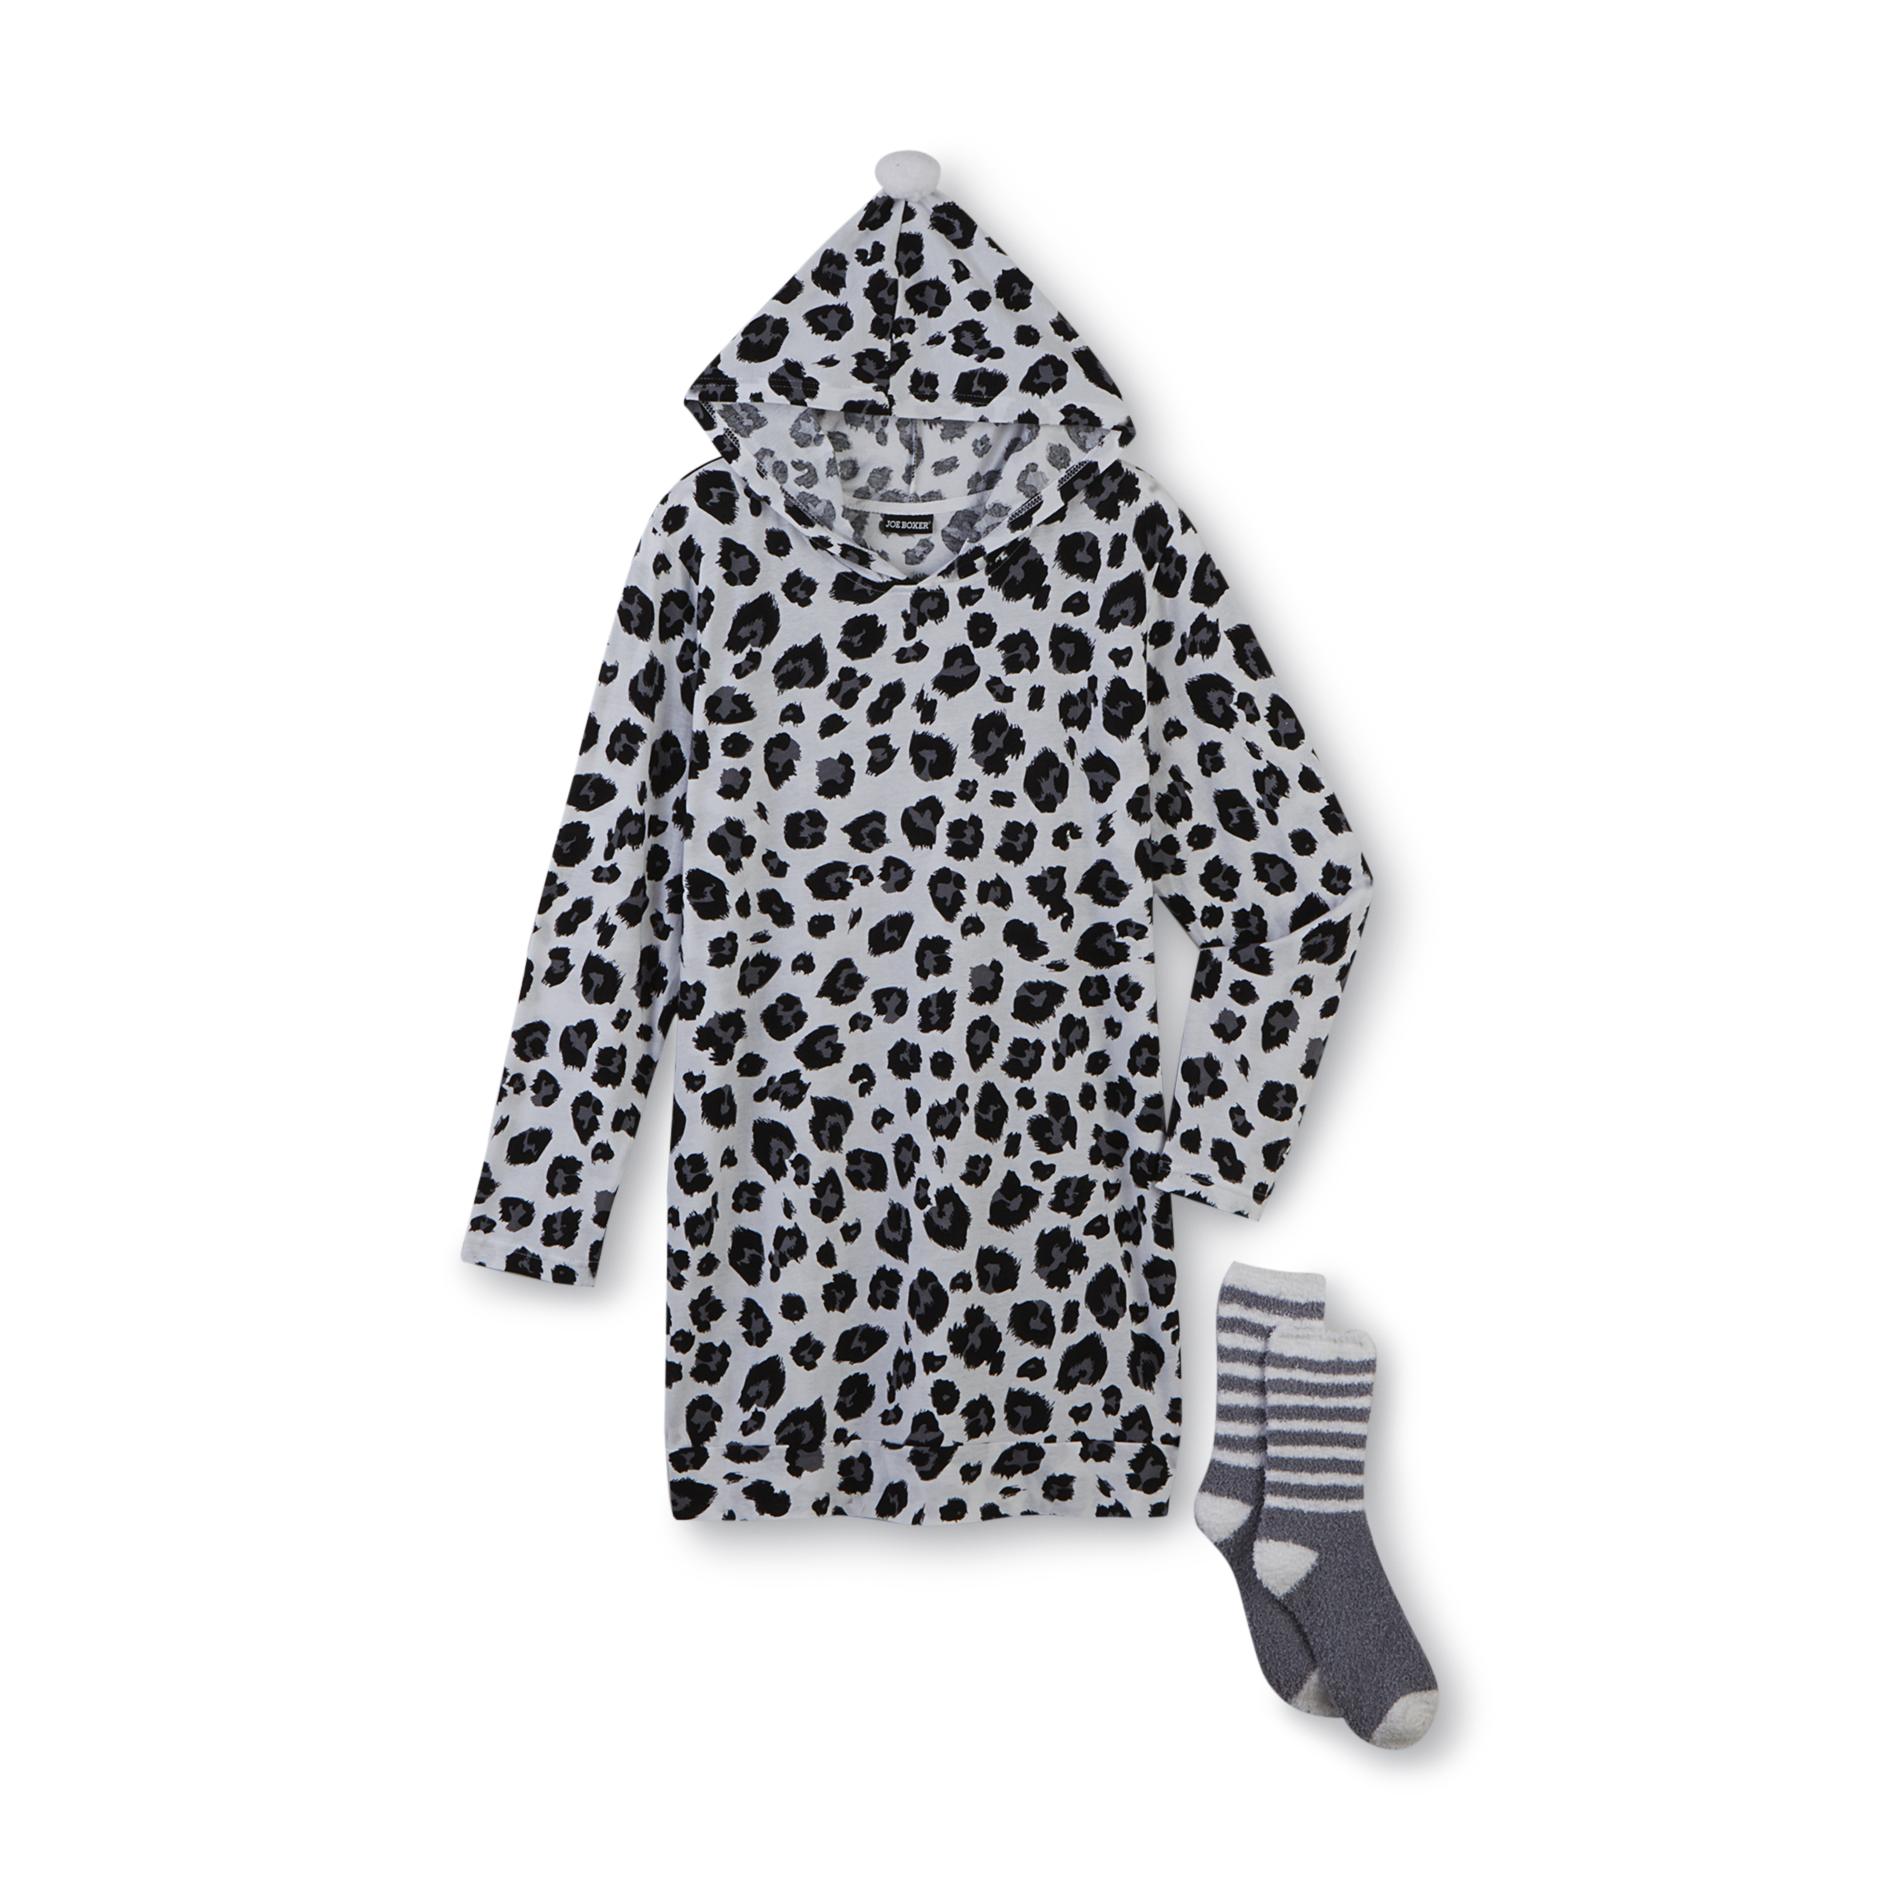 Joe Boxer Women's Hooded Sleep Shirt & Fleece Socks - Leopard Print